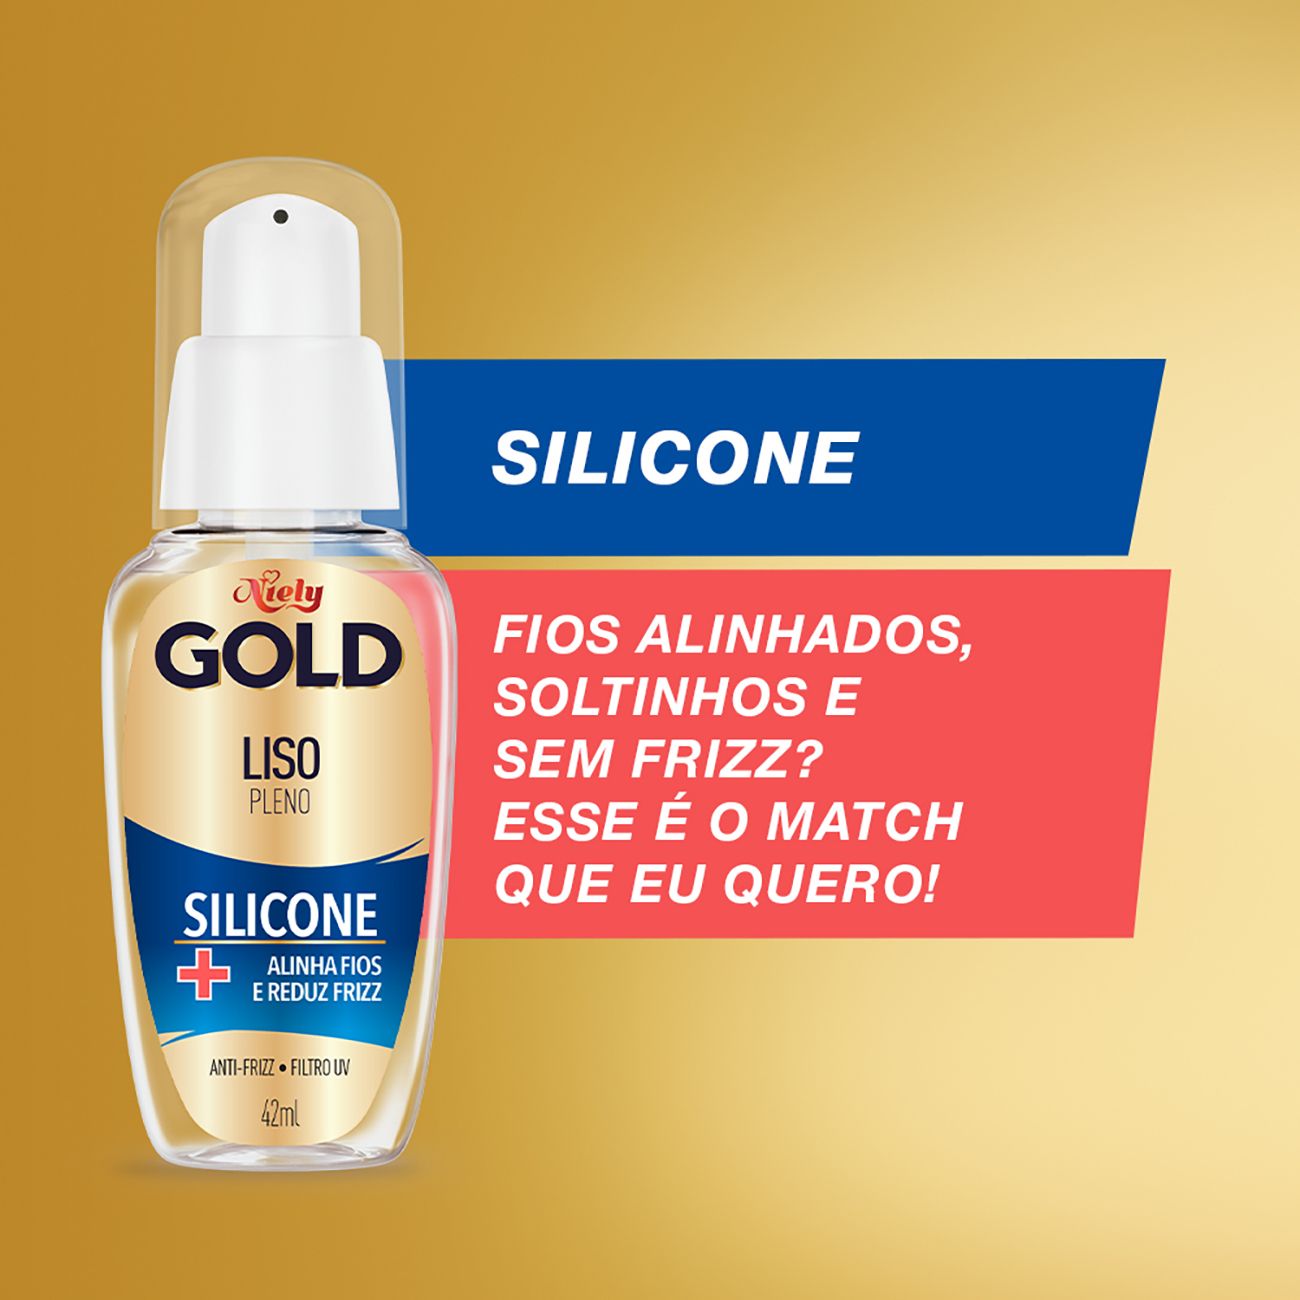 Silicone Niely Gold Liso Pleno 42mL